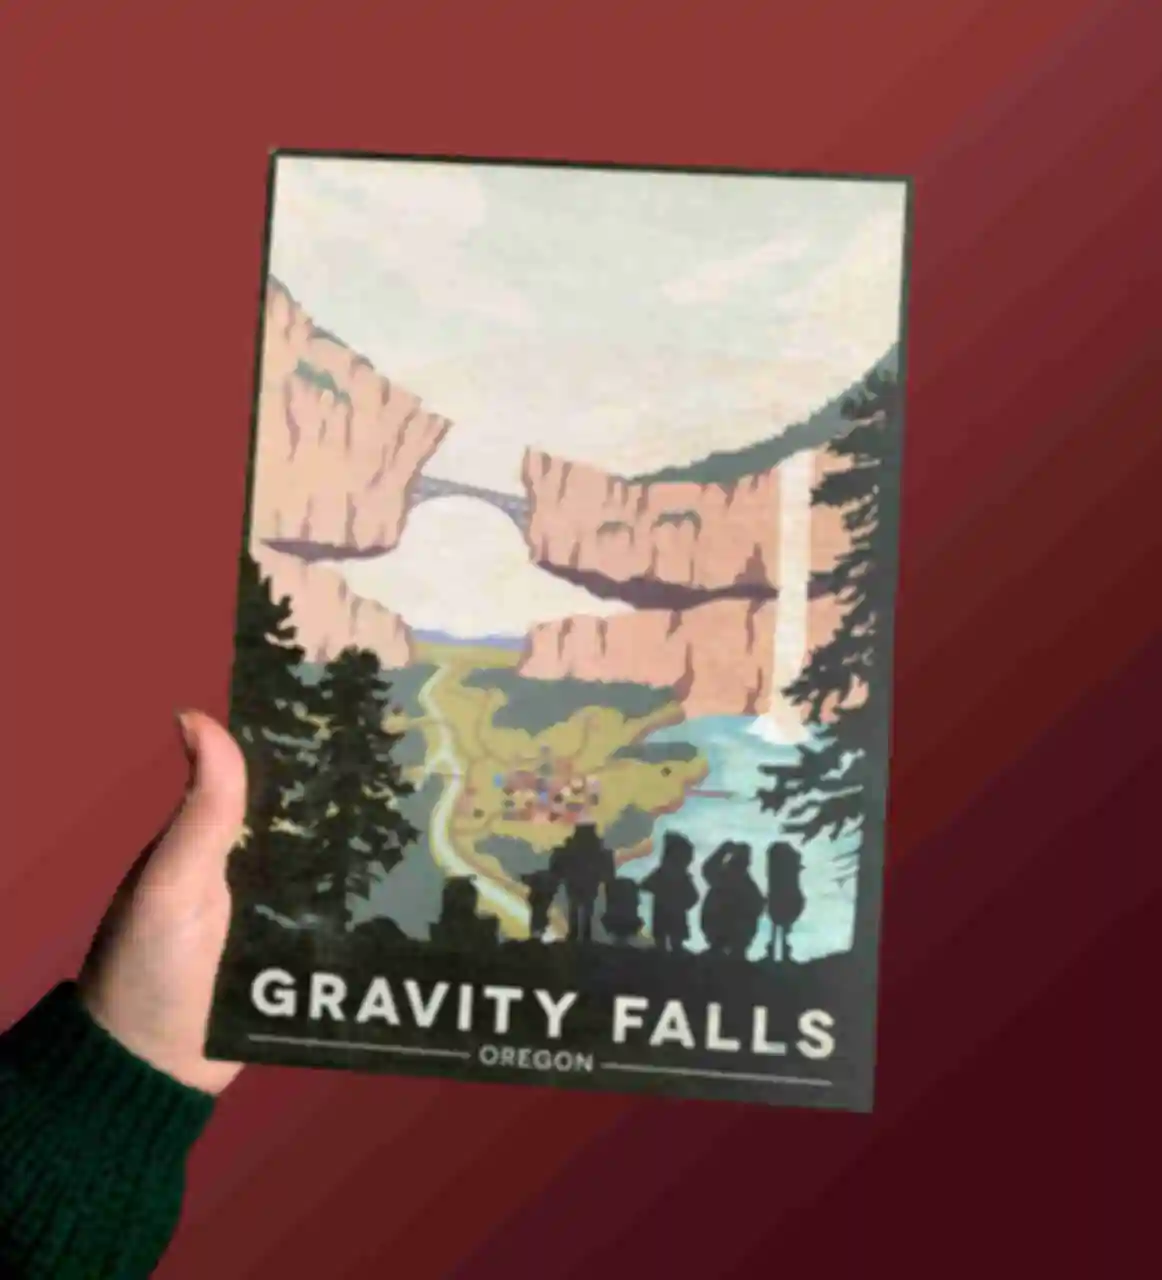 SALE Деревянный постер • Деревушка Gravity Falls • Плакат Гравити Фолз • Подарок фанату мультсериала